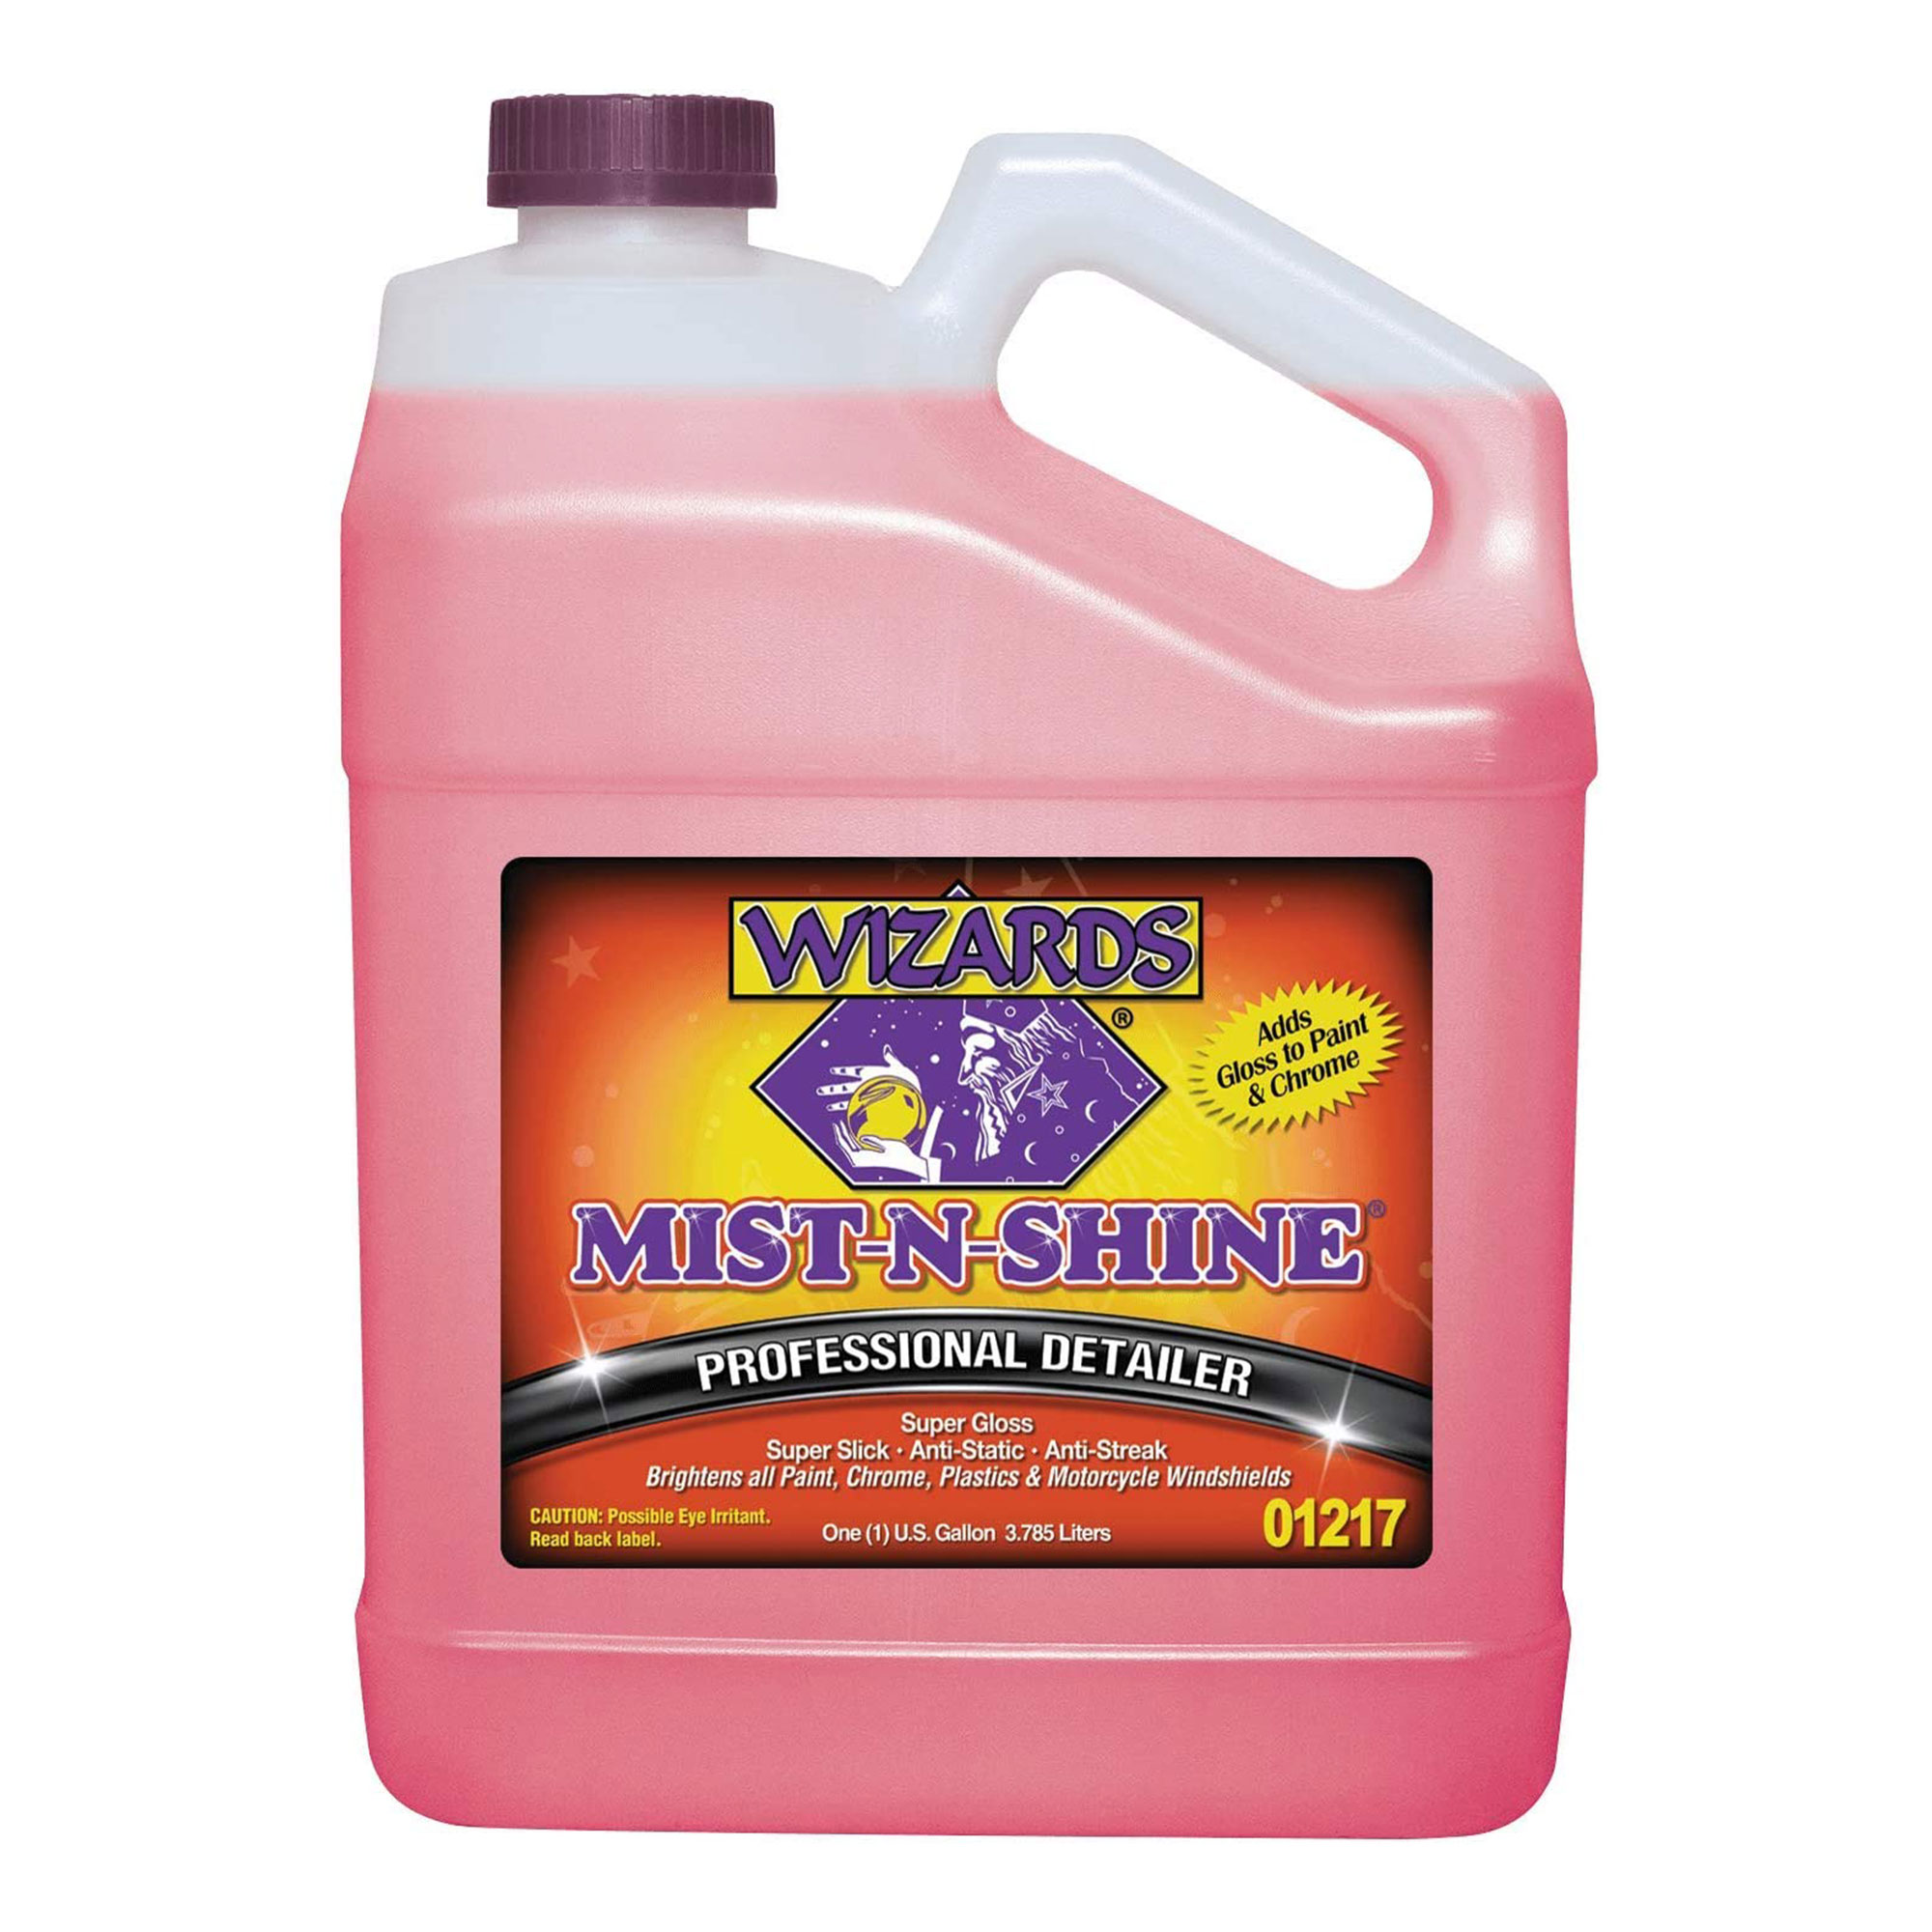 Wizards Mist-N-Shine Professional Detailer,1 Gallon